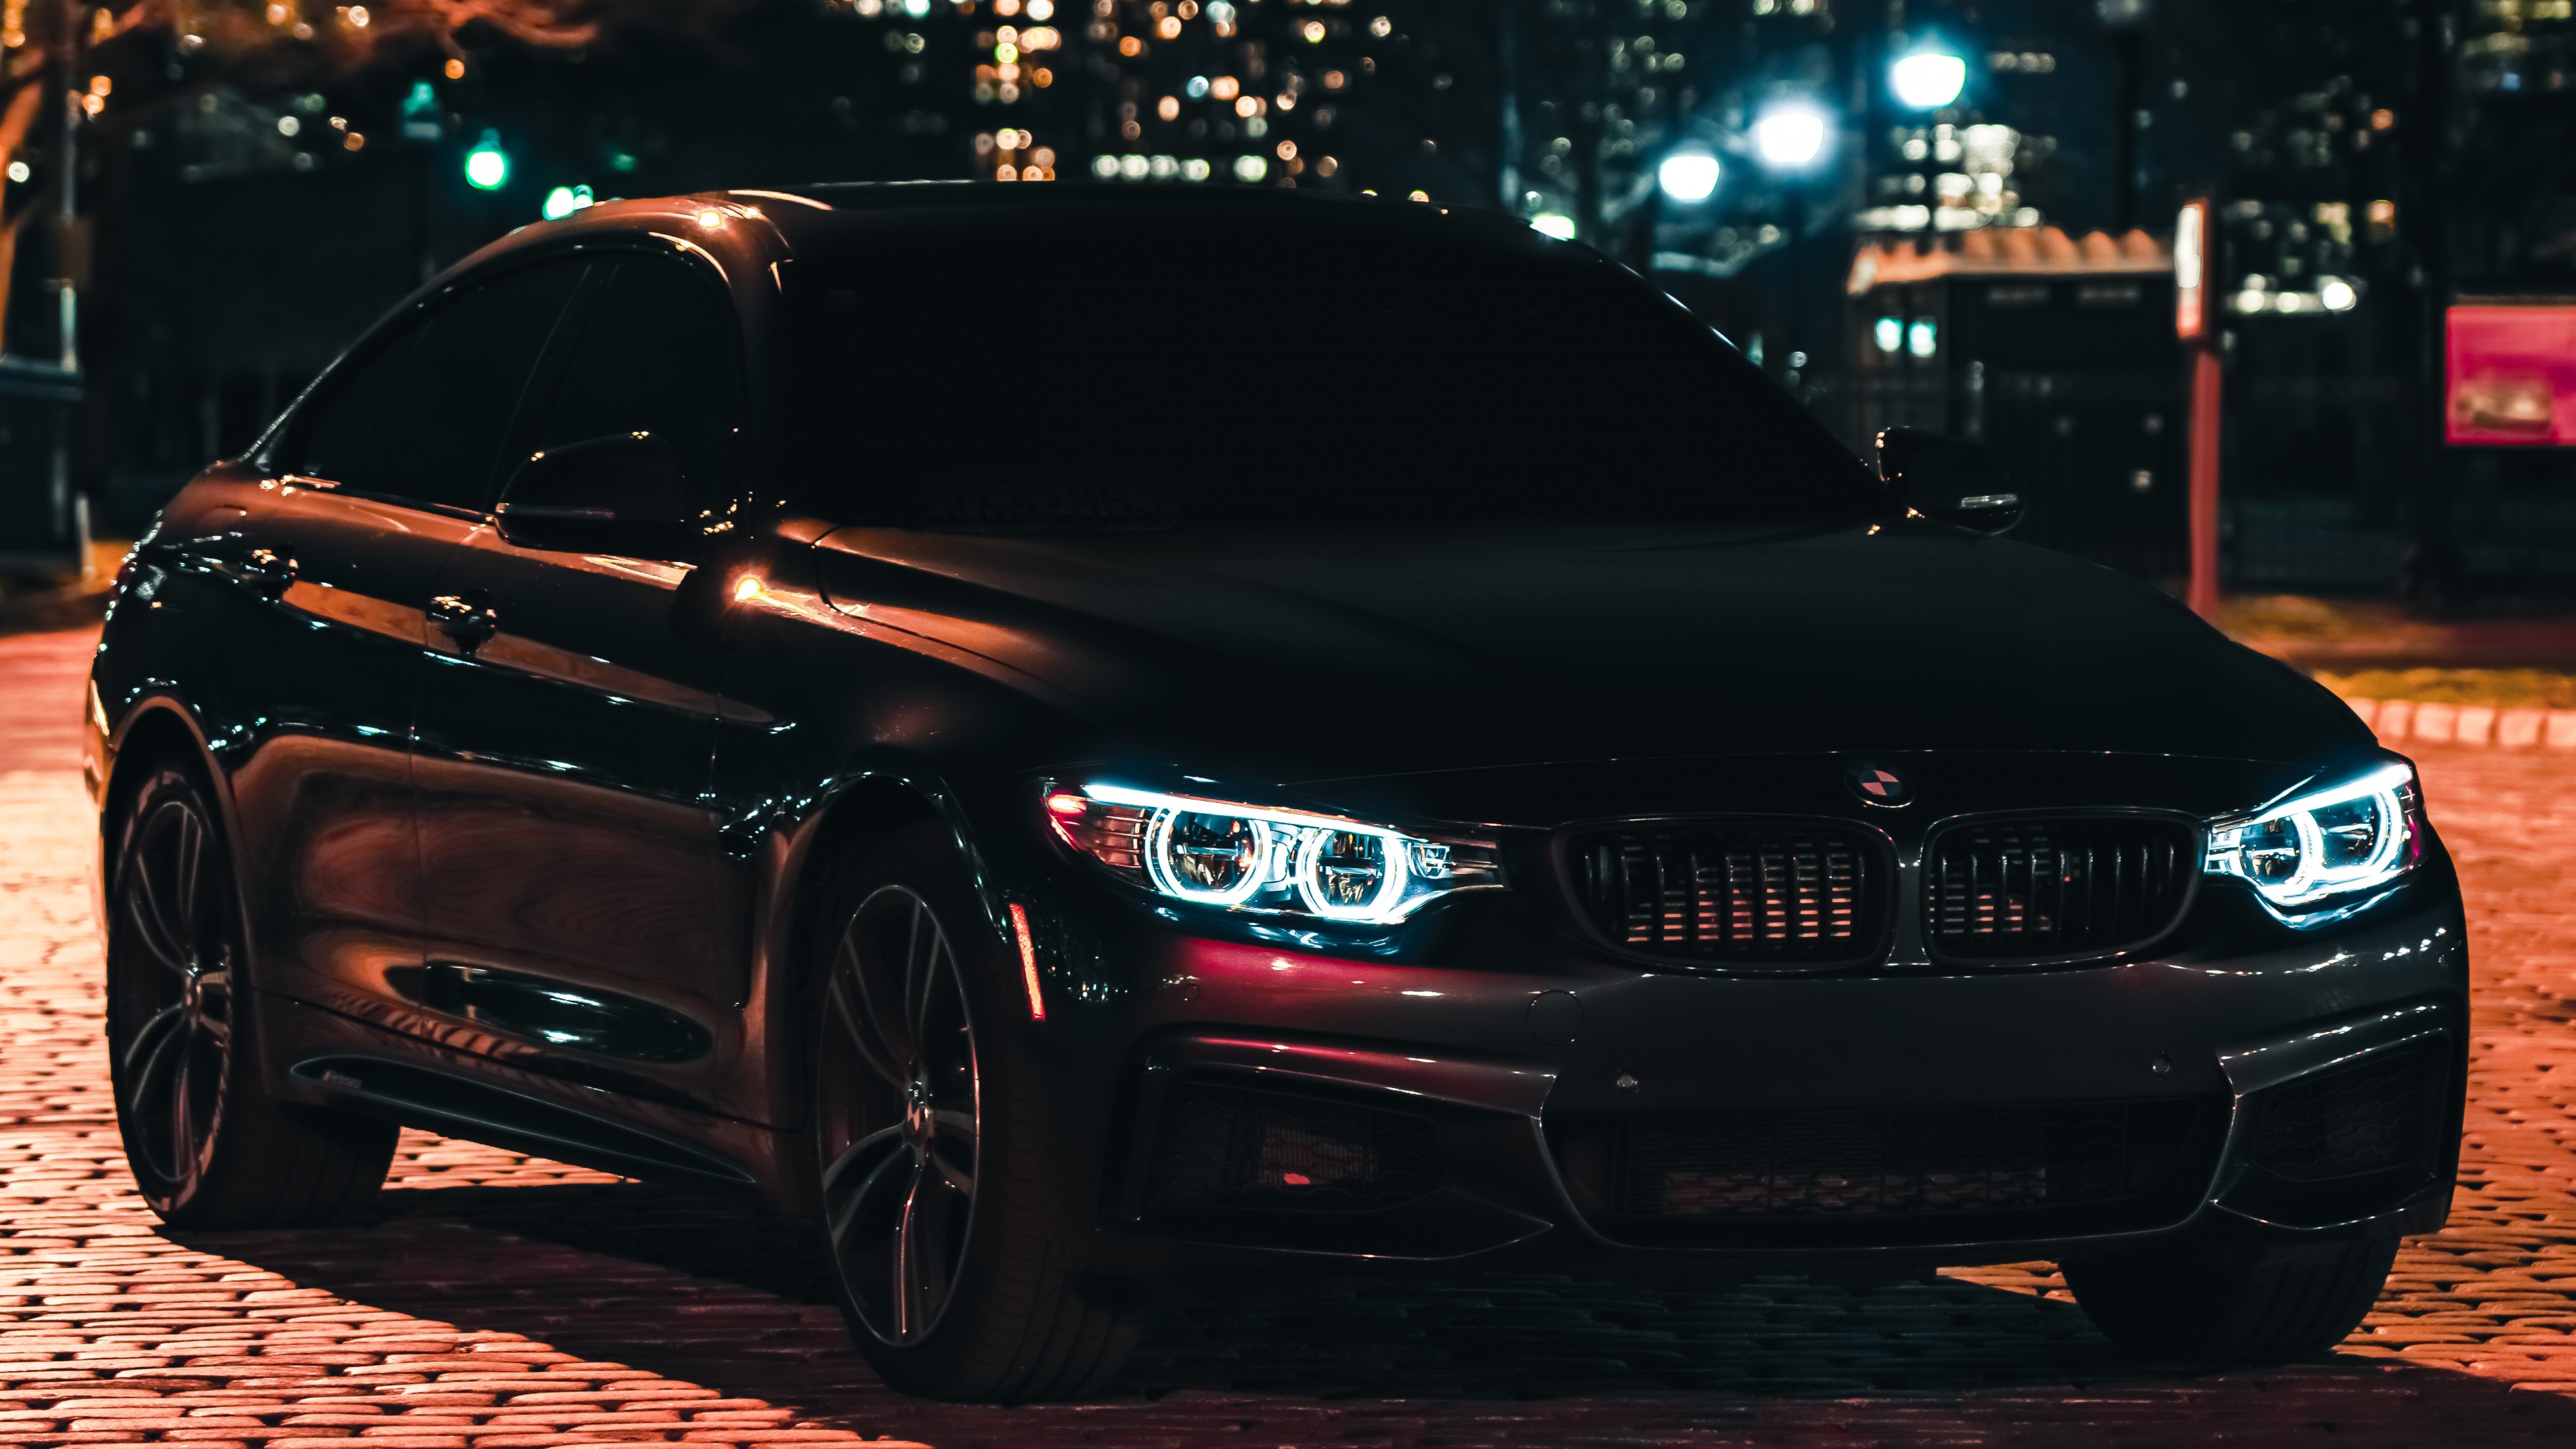 BMW M3 Wallpaper 4K, Black Edition, Night, City lights